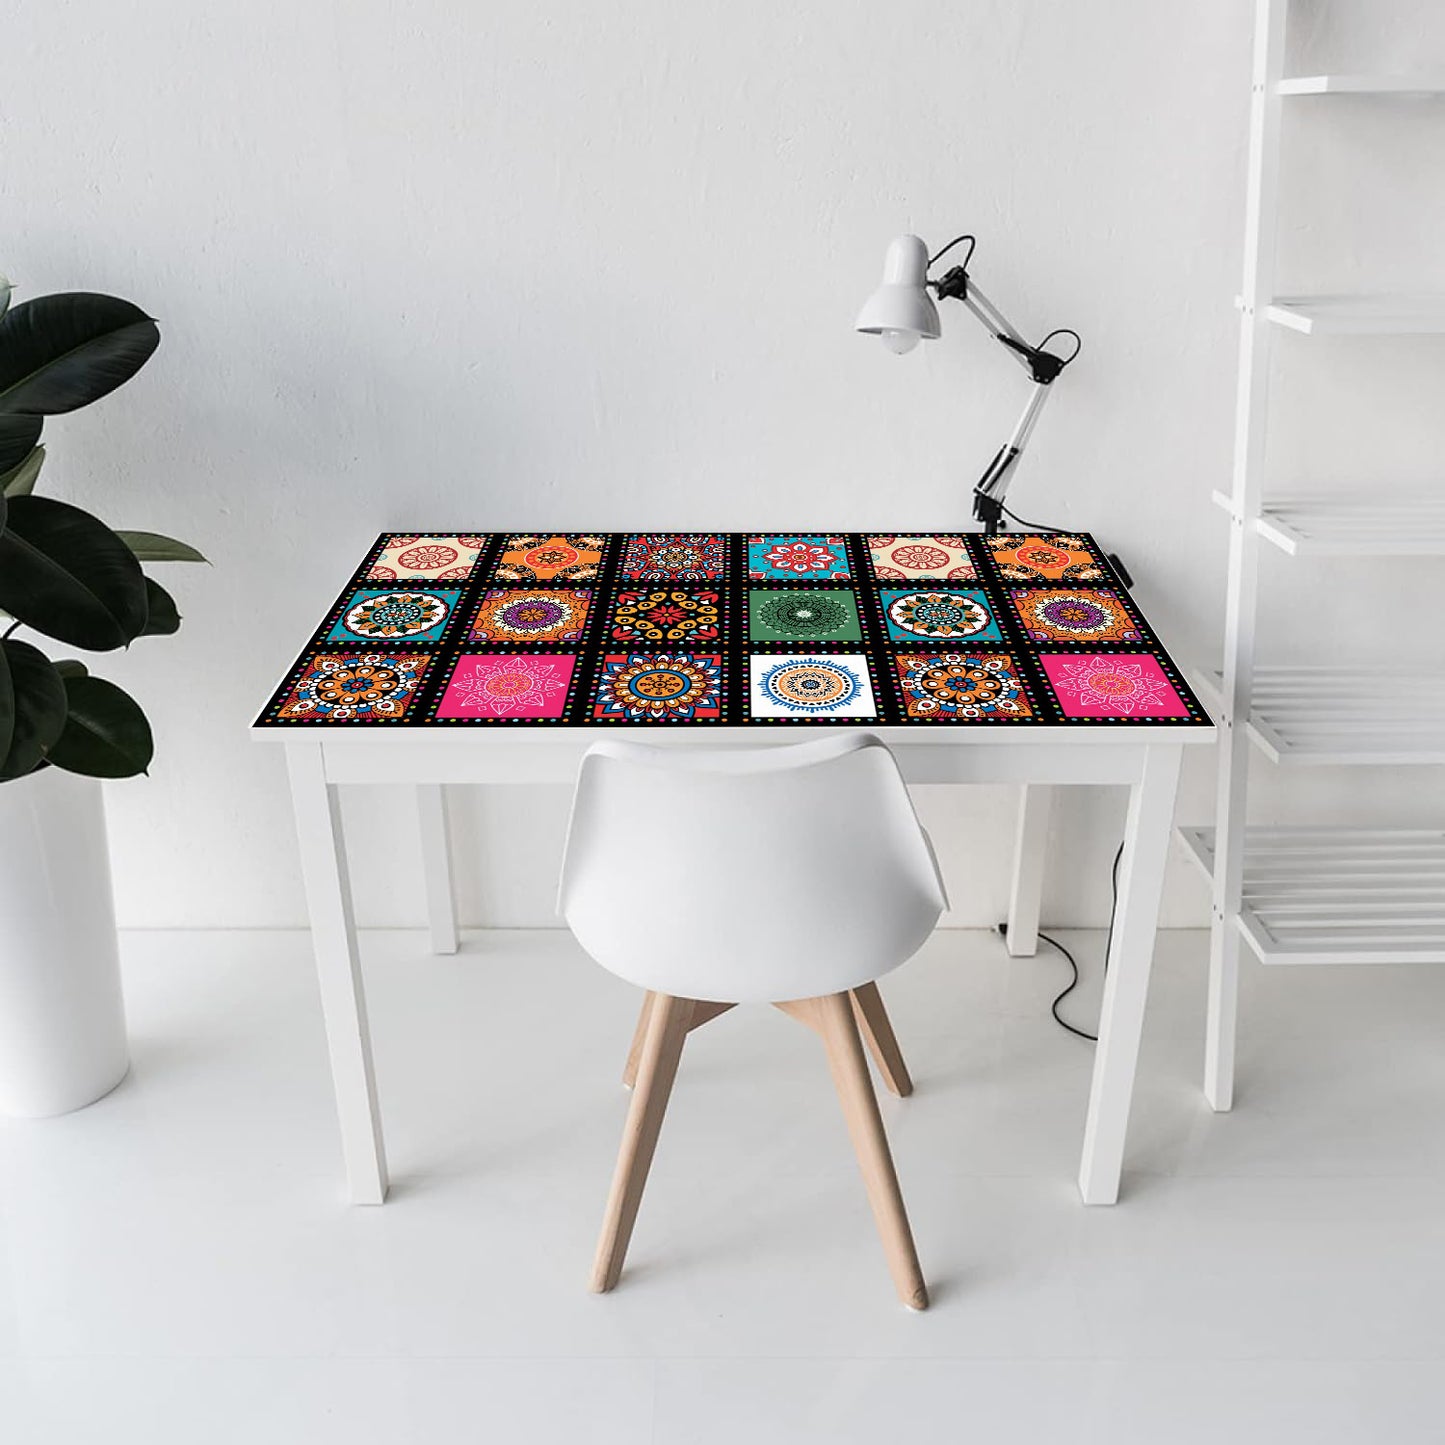 Pack of 60 | DIY Tile Sticker Sheets for Home Decor